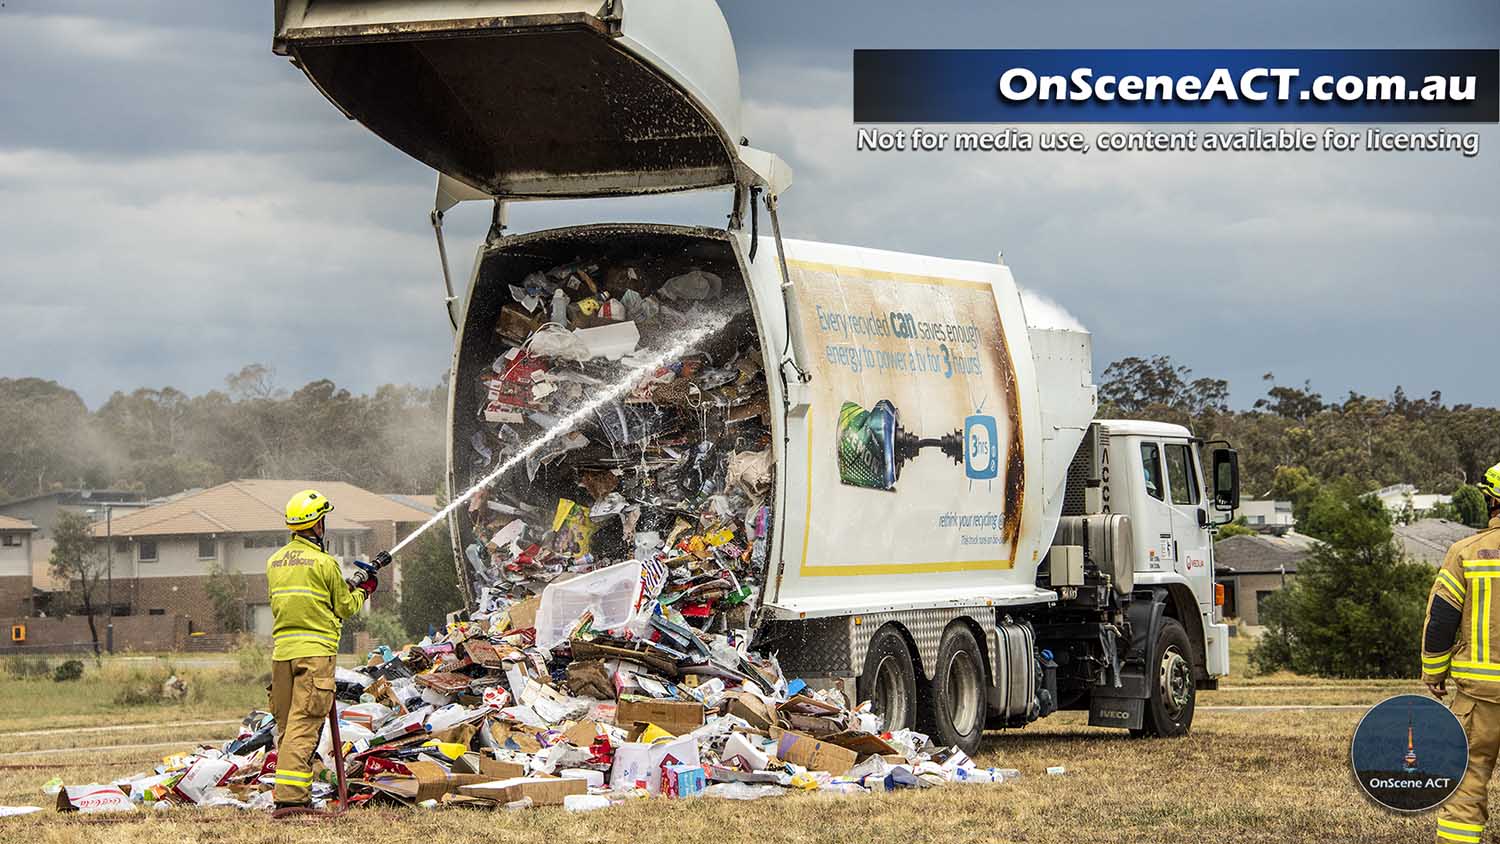 20230118 1500 bonner garbage truck fire image 3